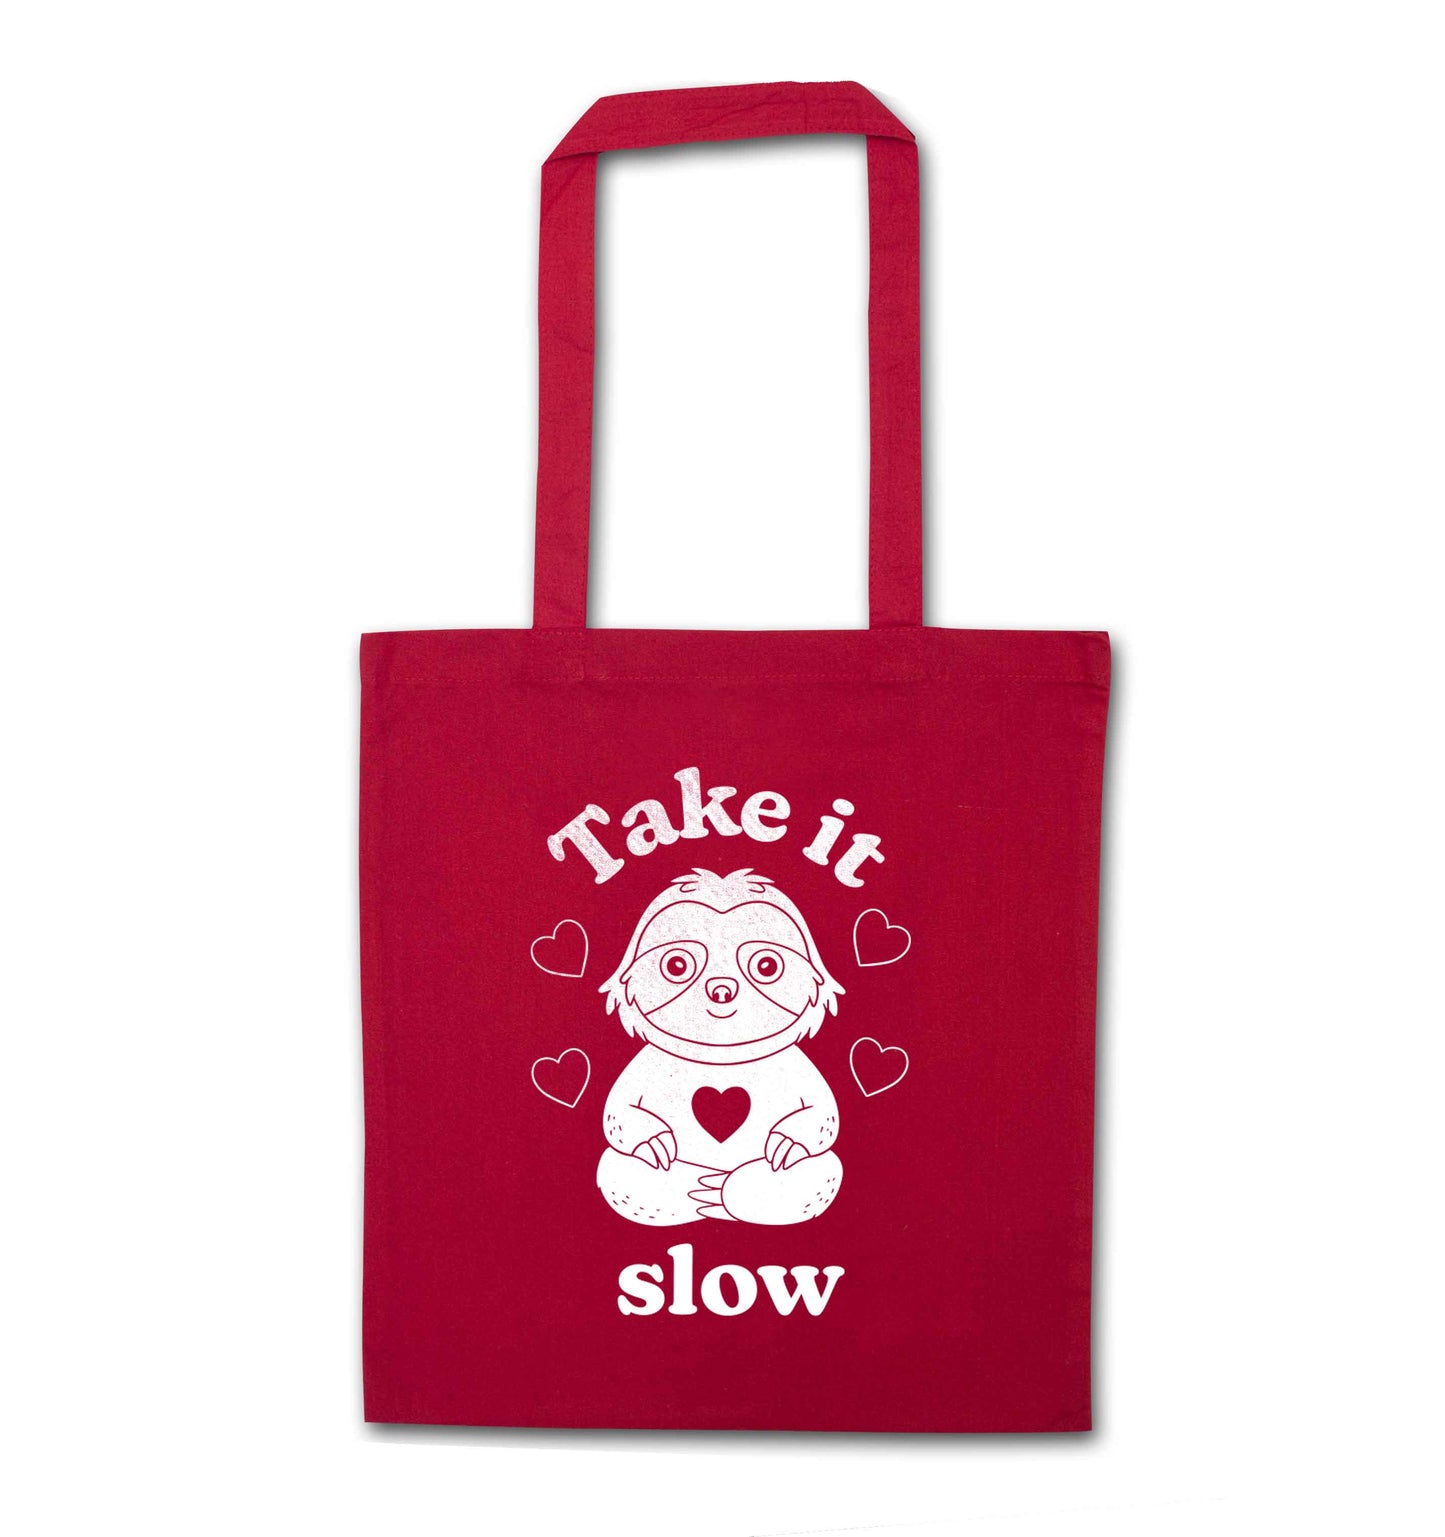 Take it slow red tote bag